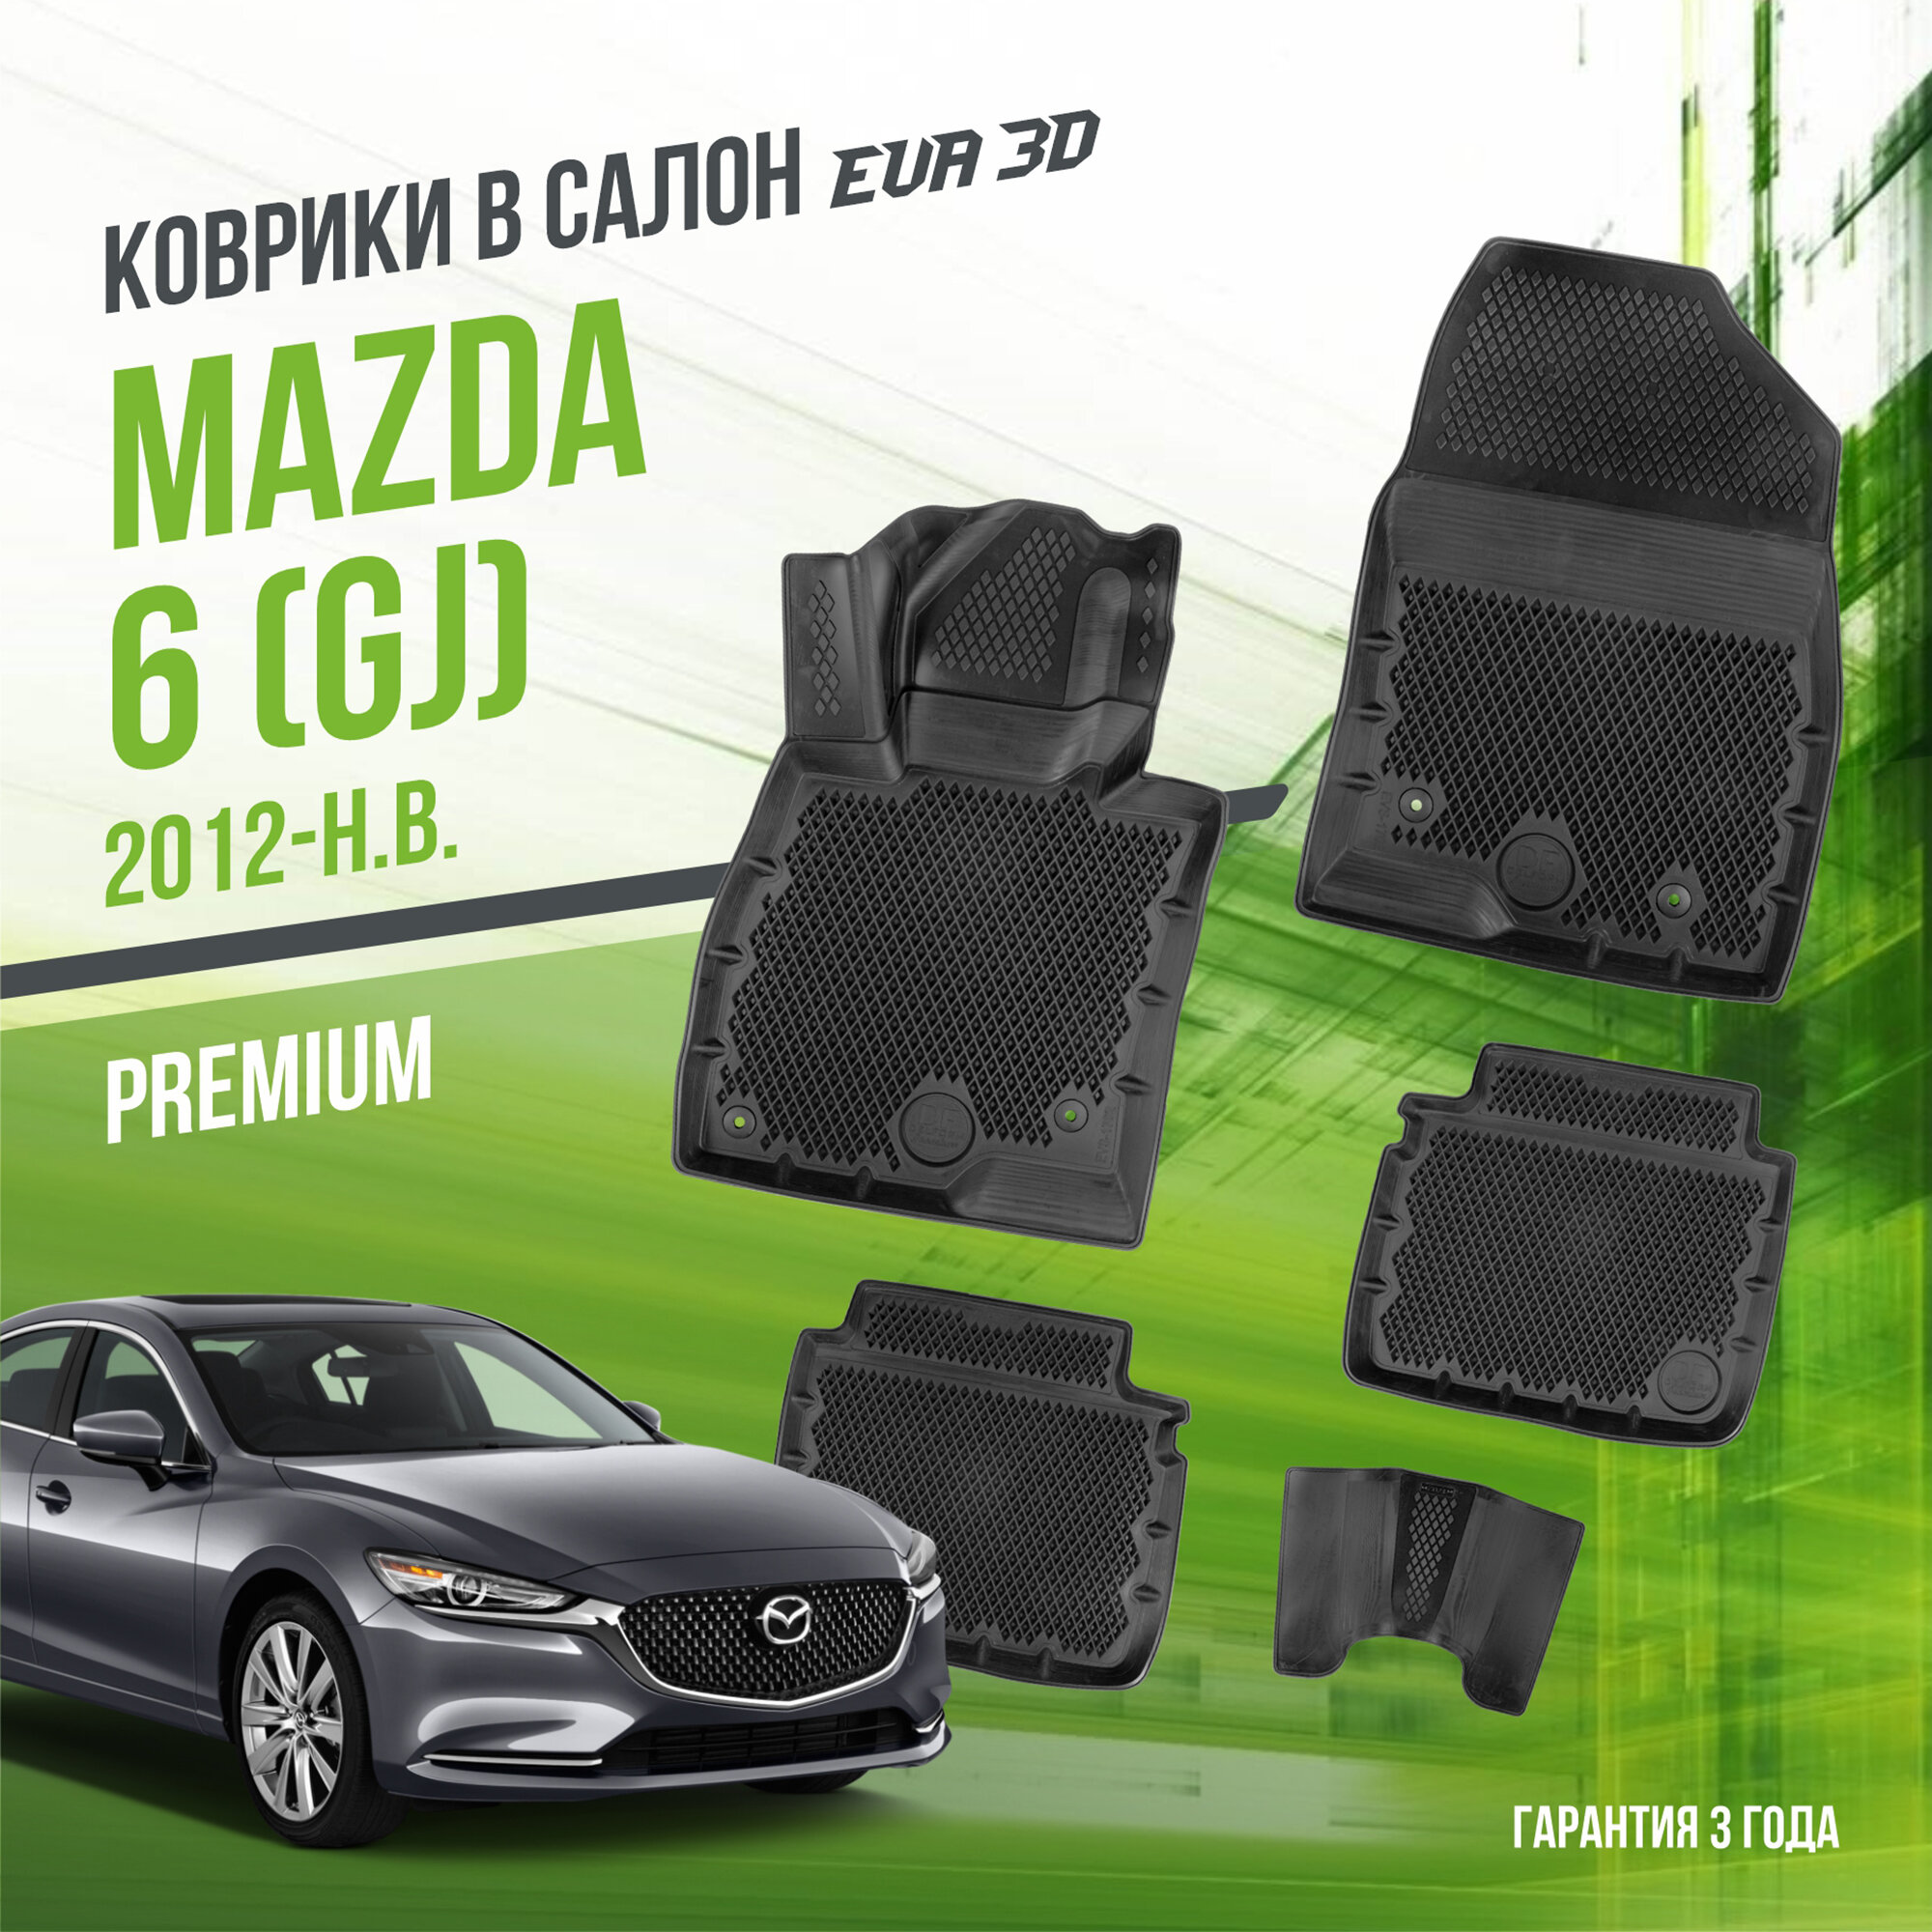 Коврики в салон Mazda-6 II "GJ" (2012-н. в.) / Мазда-6 / набор "Premium" ковров DelForm с бортами и ячейками EVA 3D / ЭВА 3Д